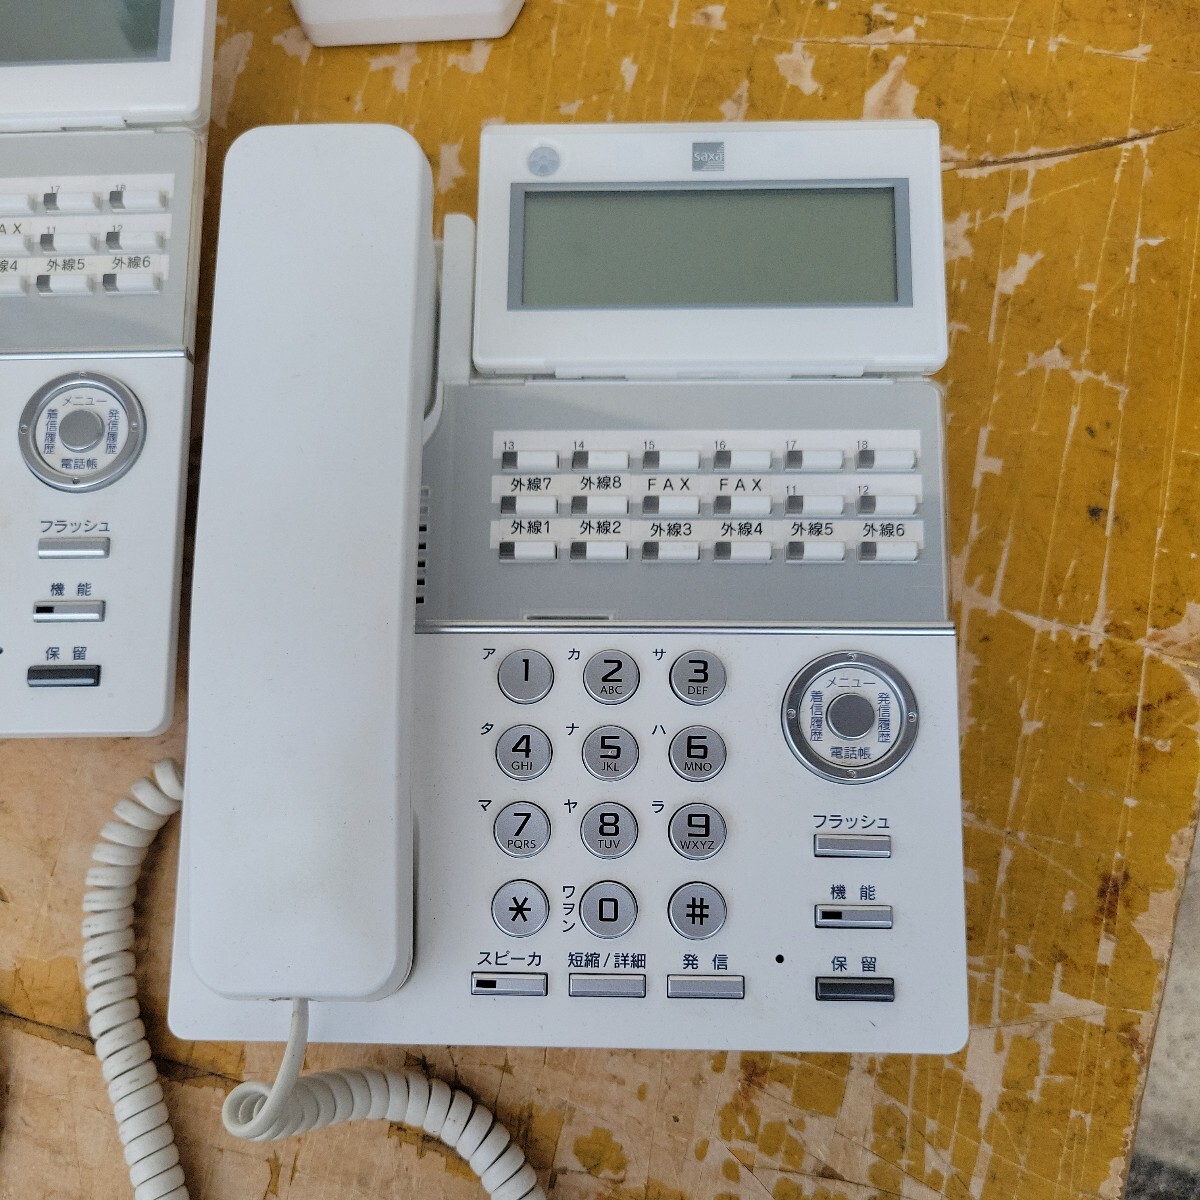  Saxa PD810 business phone SAXA 3 pcs 